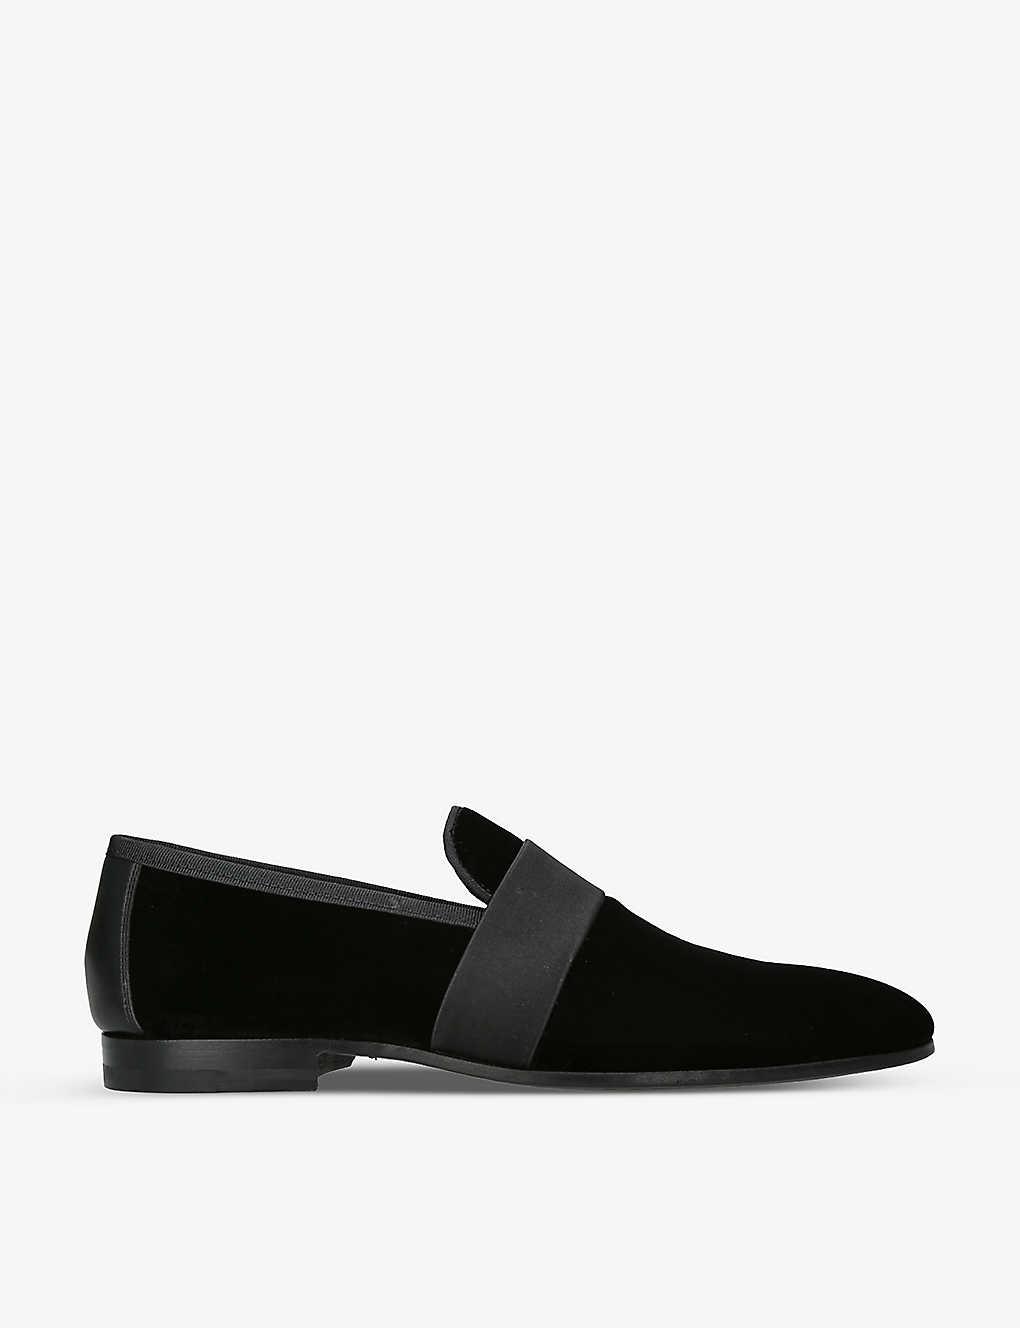 Magnanni Jenaro Patent-leather Loafer in Black for Men | Lyst